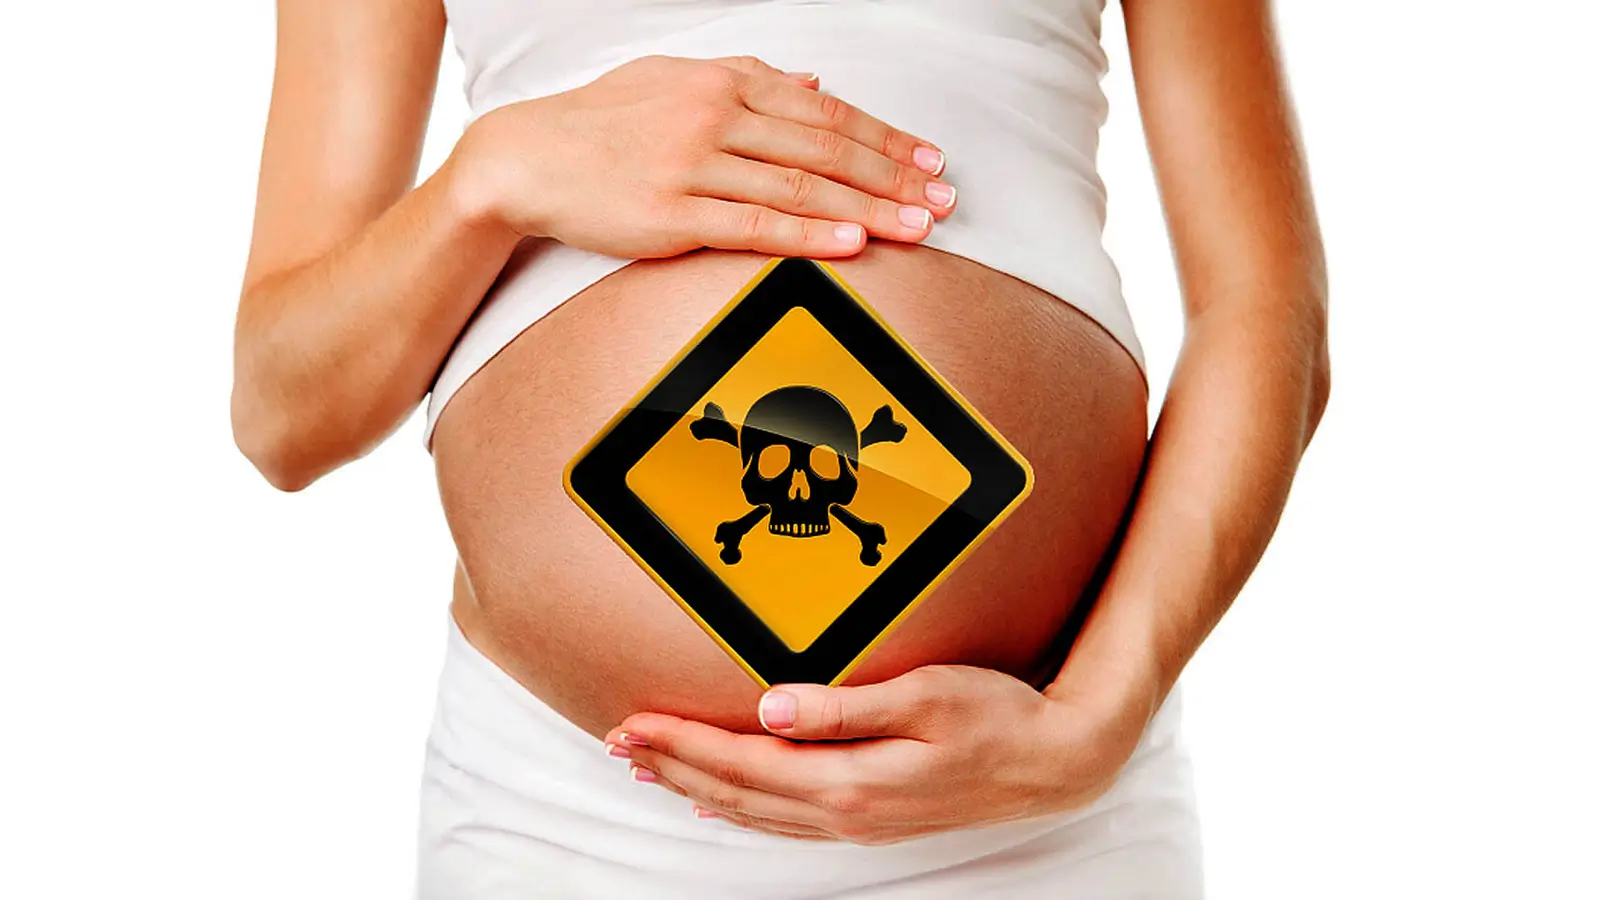 Detoxification and pregnancy toxicity exposure risk- The vegan argument